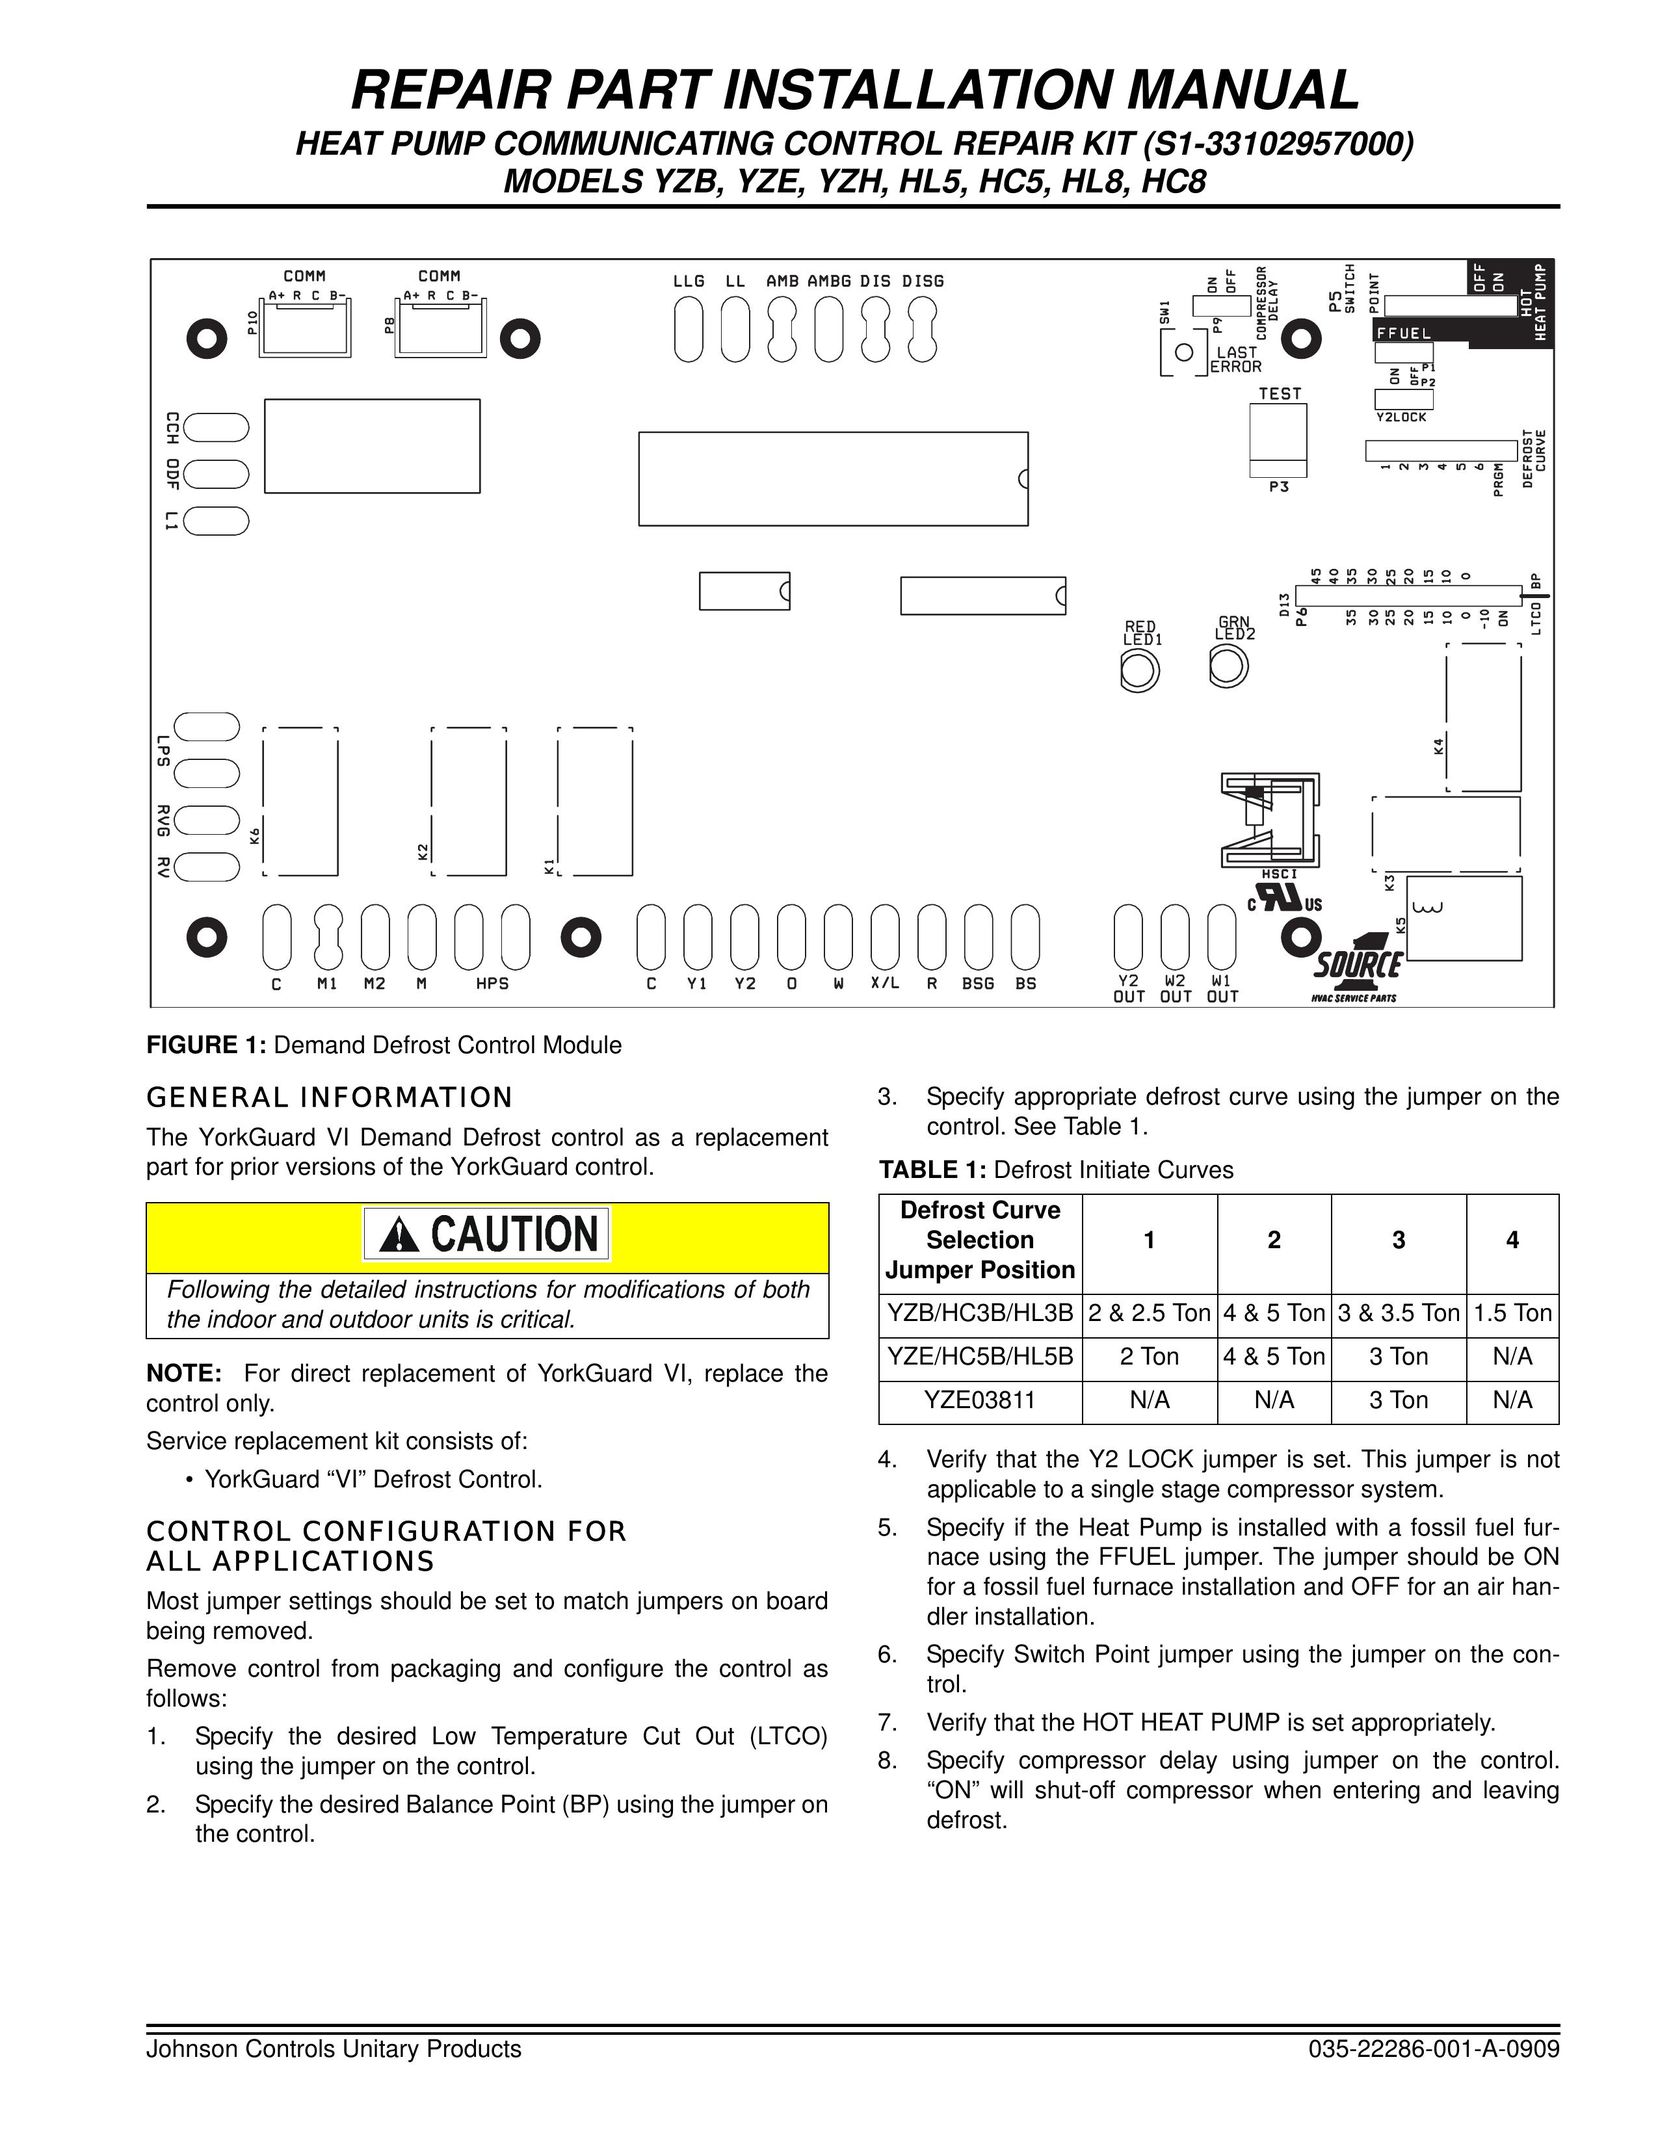 Johnson Controls yzh Heat Pump User Manual